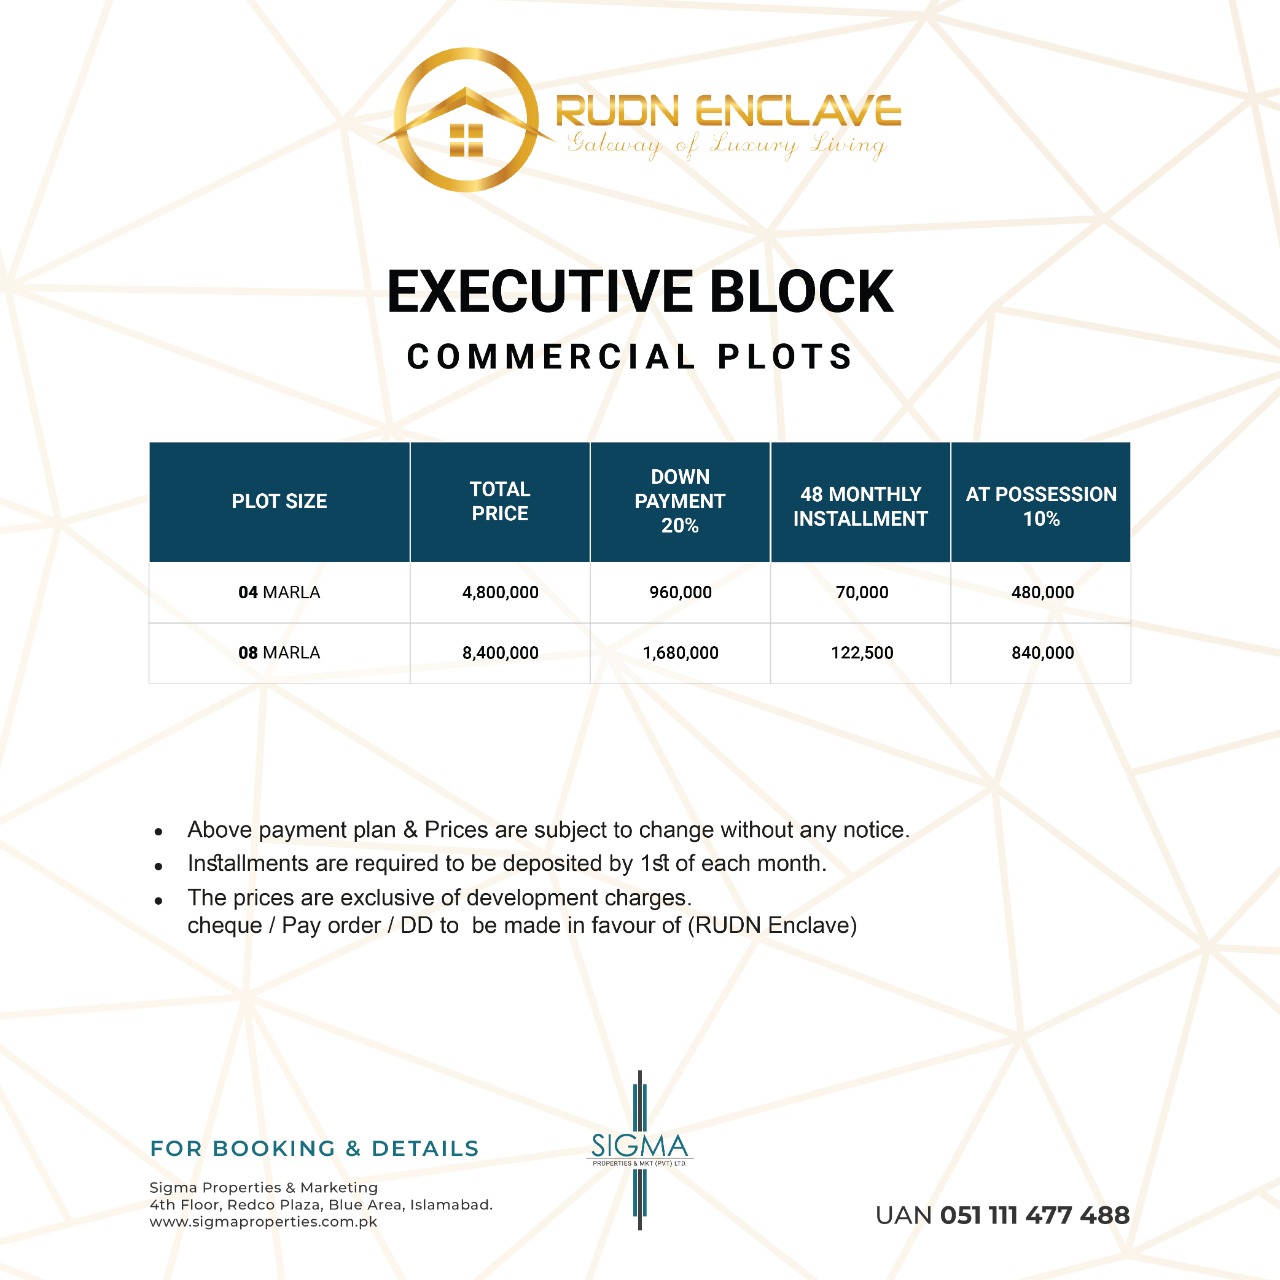 executive block commercial plot of rudn enclave